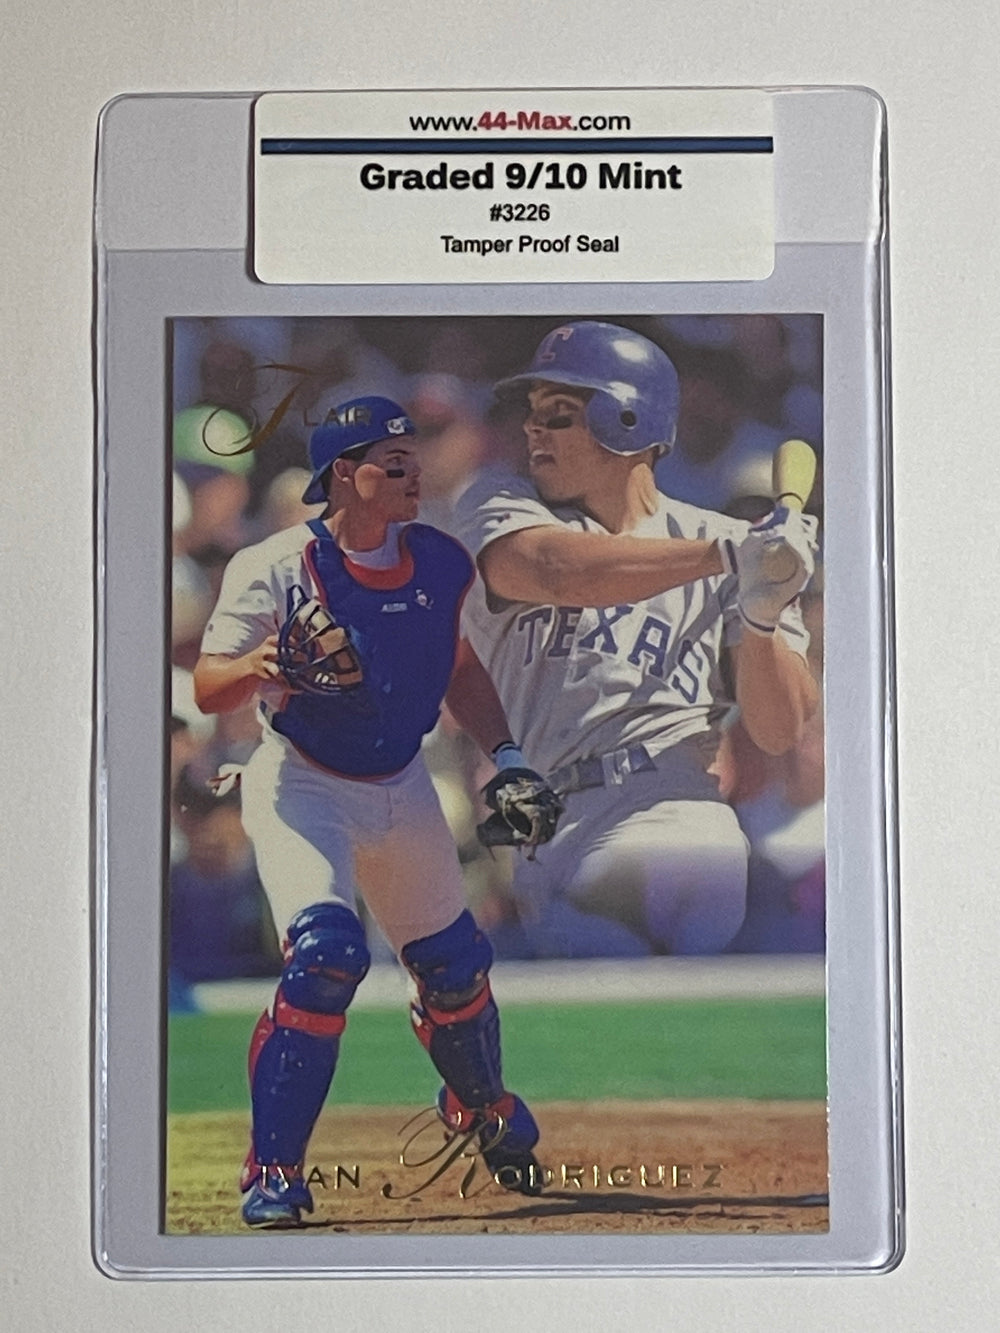 Ivan Rodriguez 1993 Flair Baseball Card. 44-Max 9/10 Mint #3226